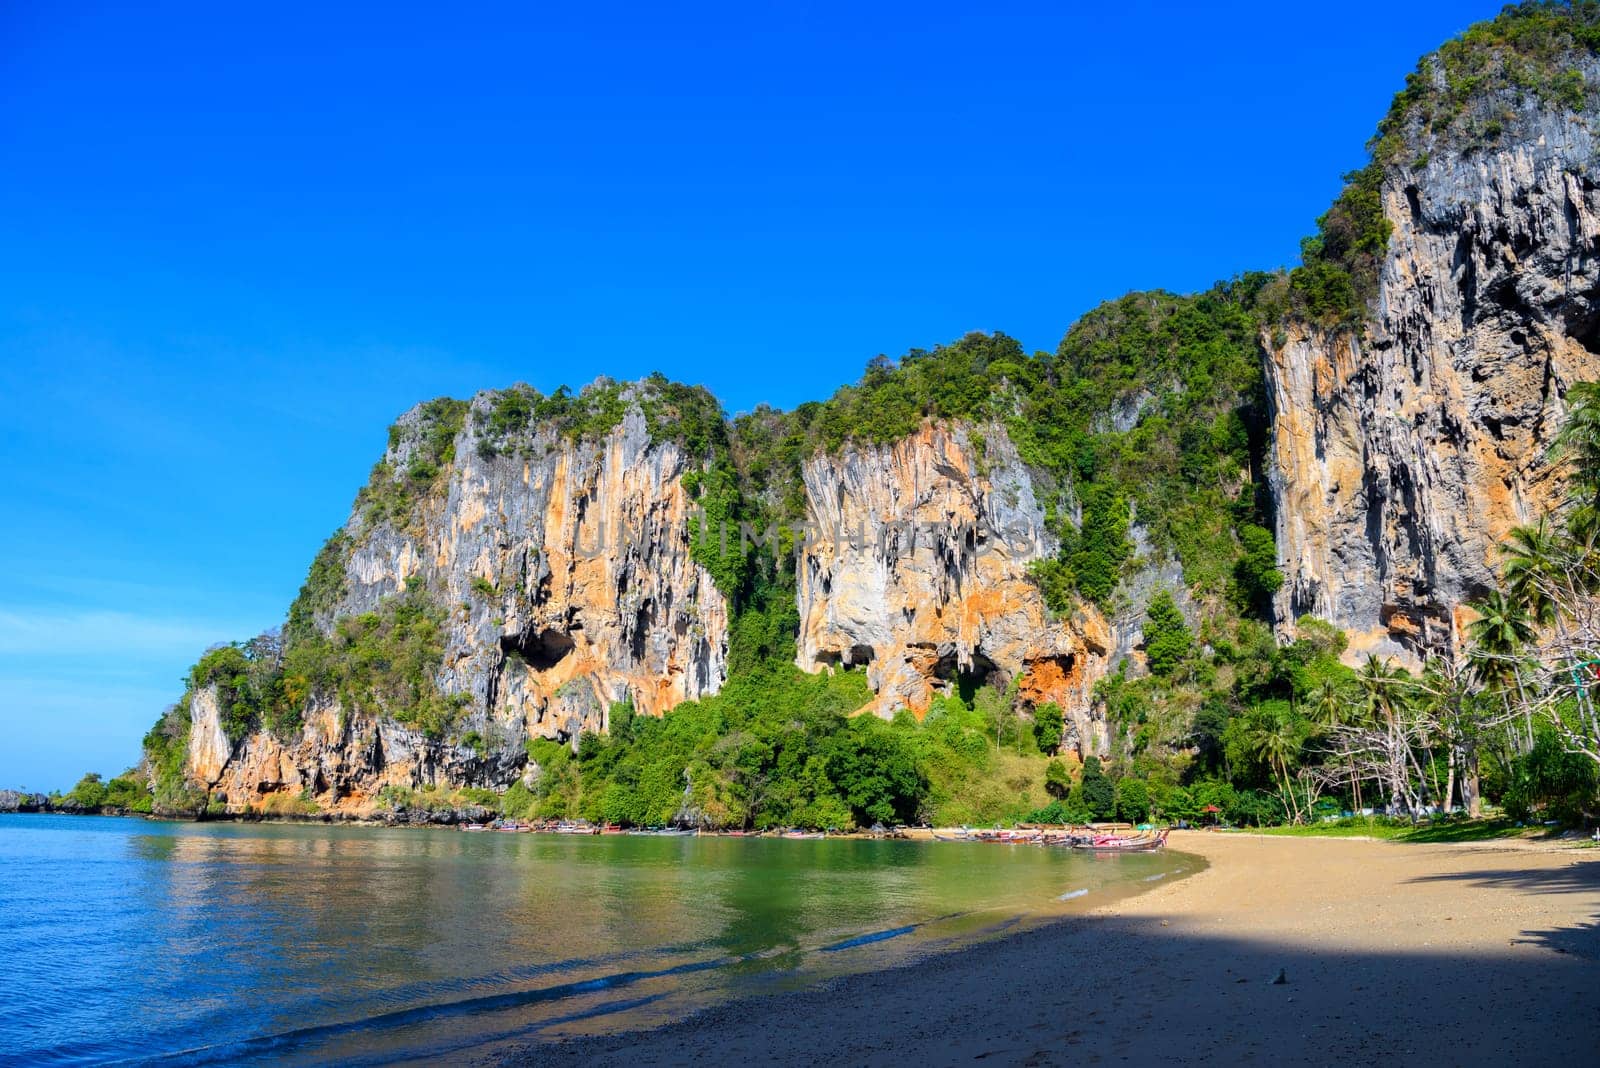 Long tail boats along cliff rocks near the beach, Tonsai Bay, Railay Beach, Ao Nang, Krabi, Thailand by Eagle2308